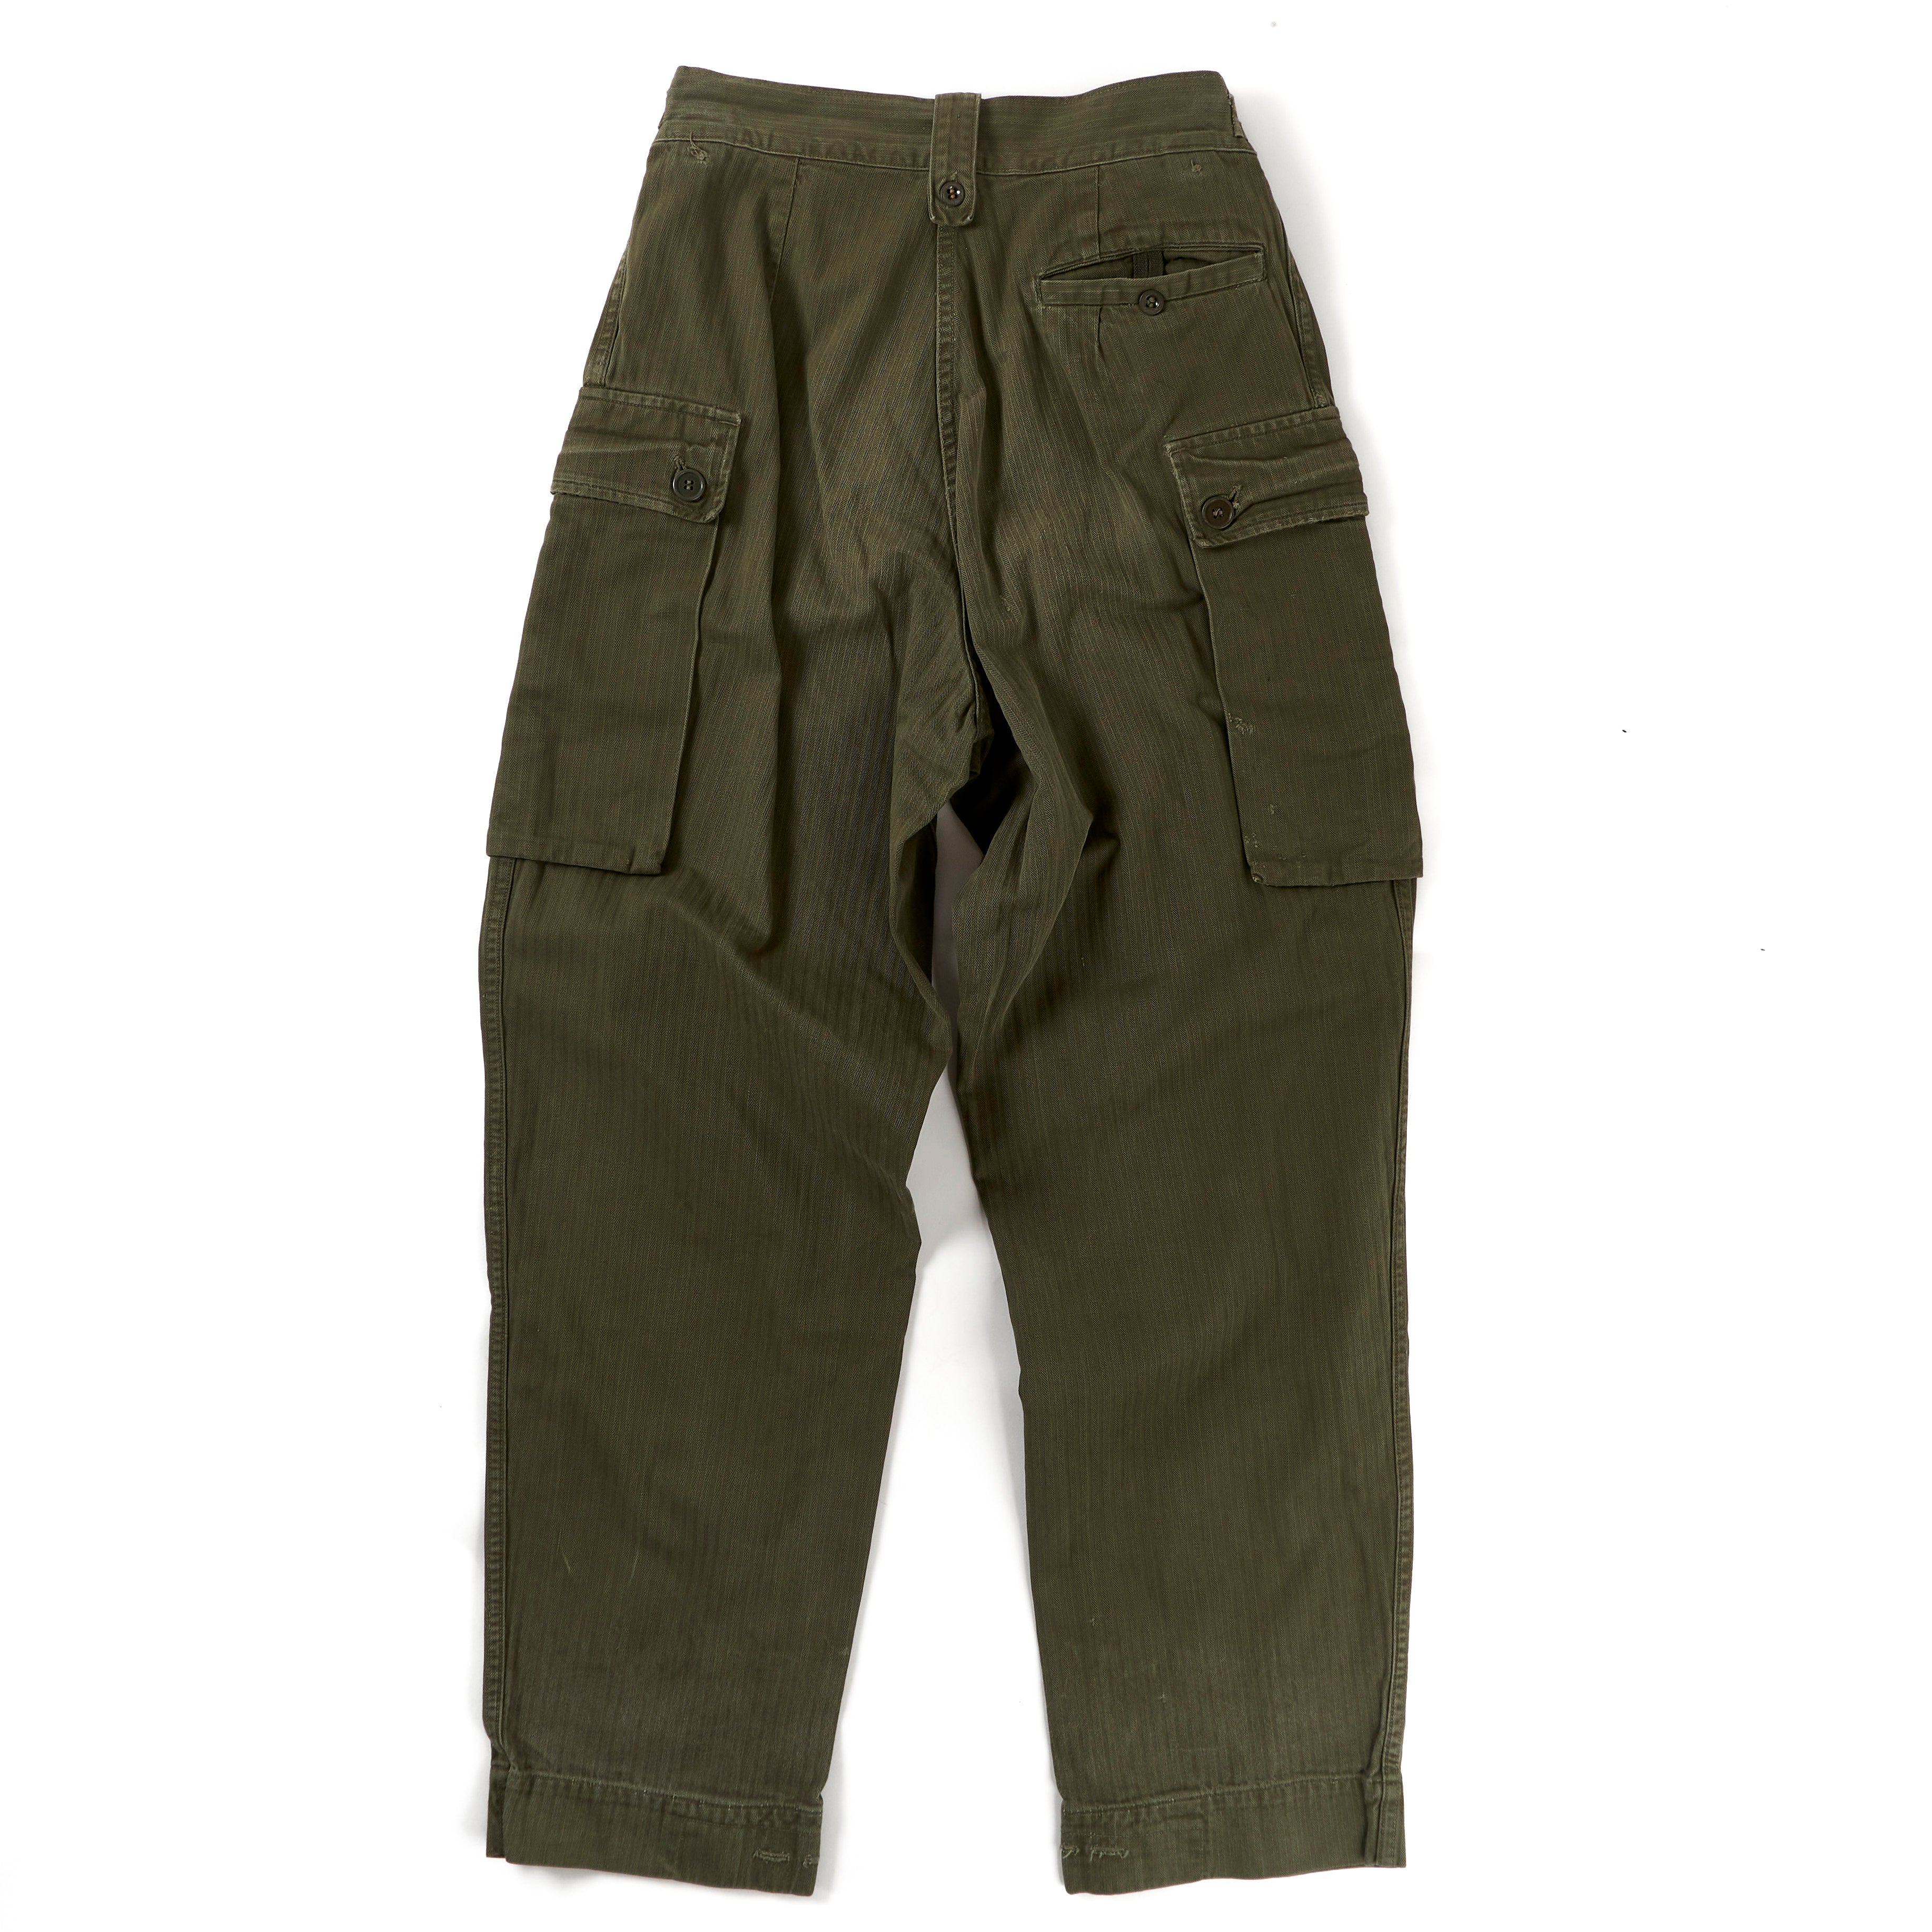 Vintage 80s Dutch Army Khaki Cargo Pants